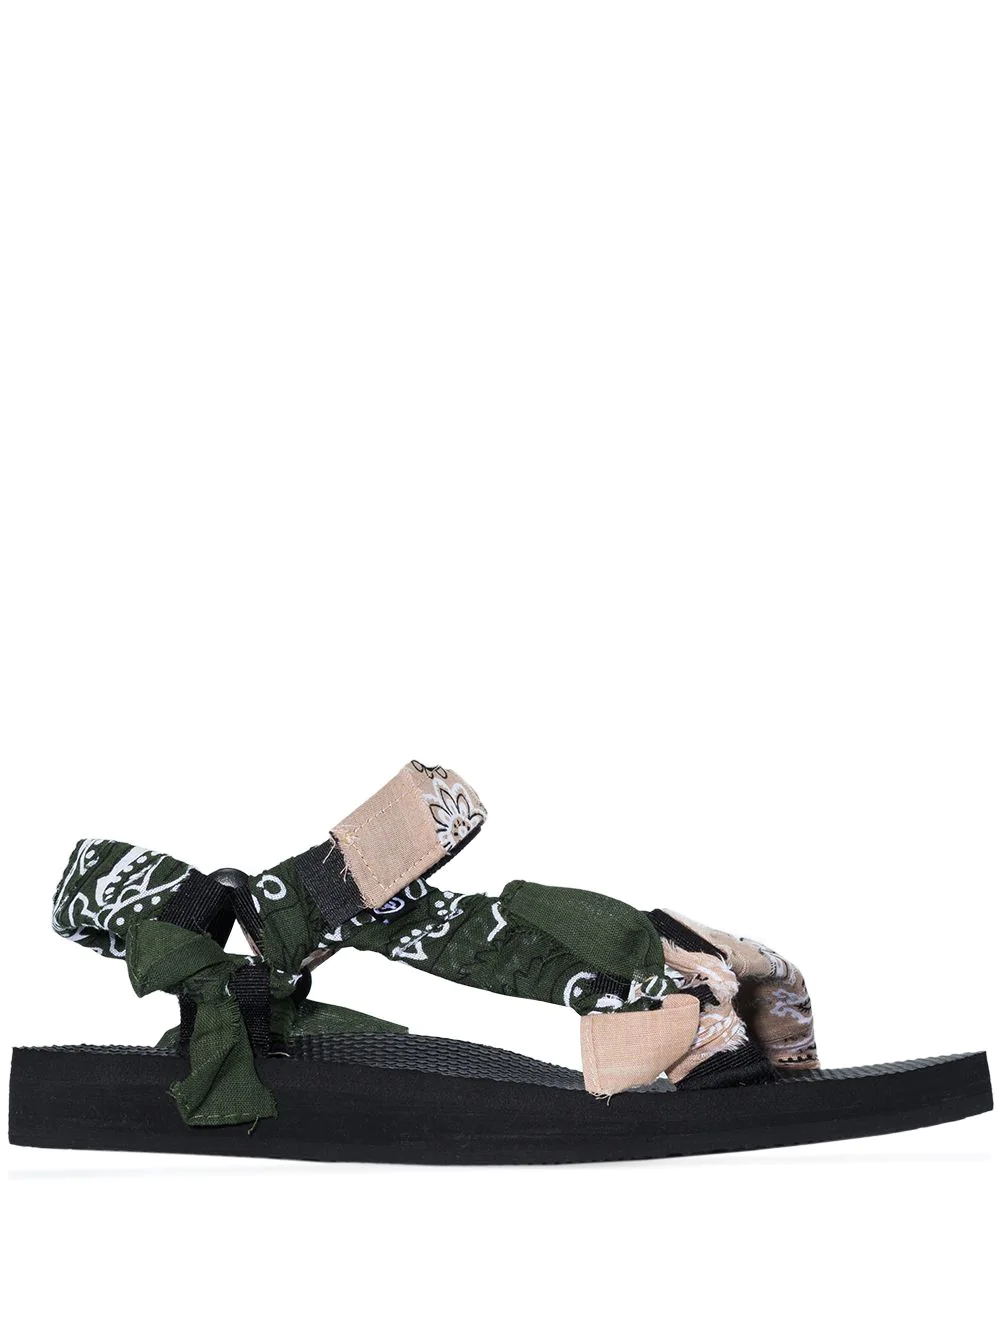 Arizona Love
Trekky bandana-print sandals